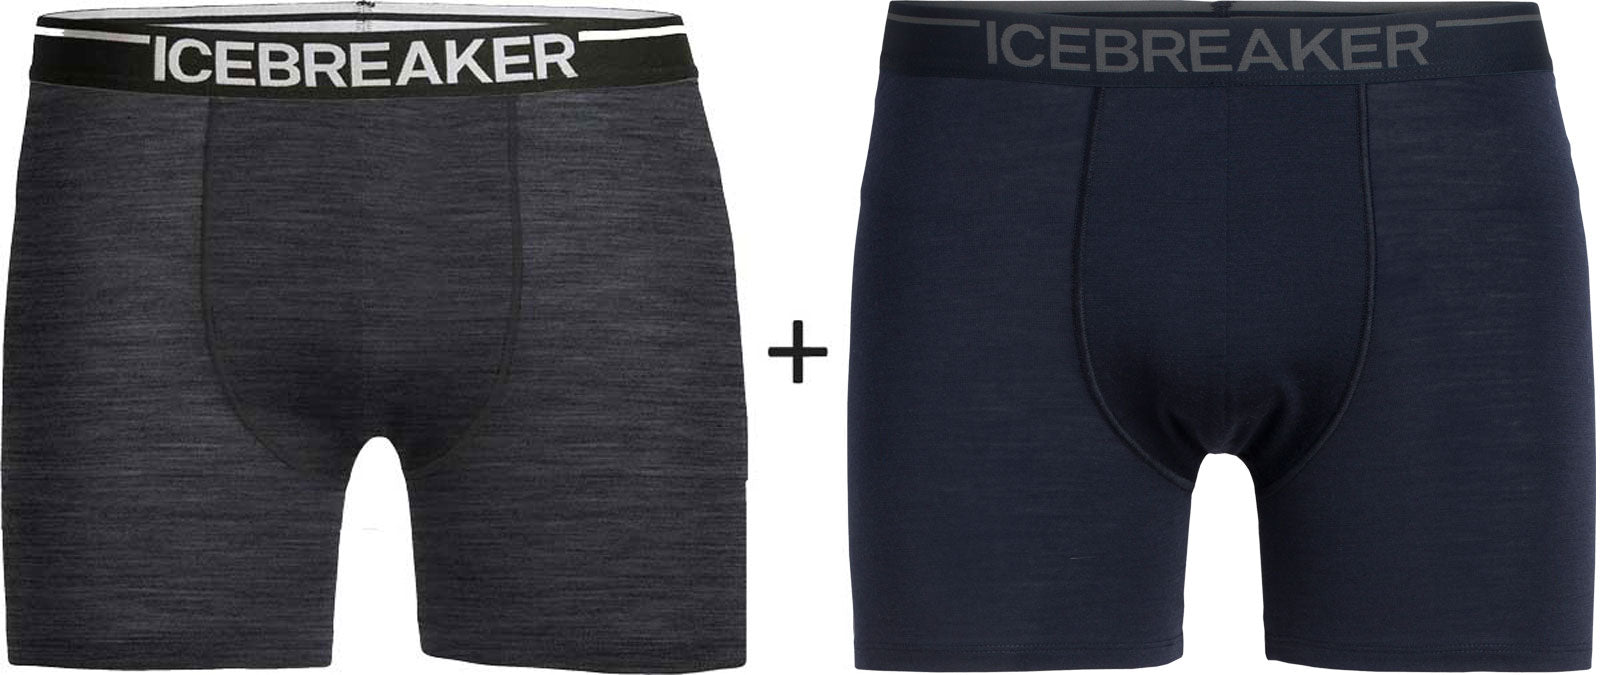 Men's Icebreaker "Anatomica" Boxer Briefs TWIN PACK {IC-103029-TWIN}